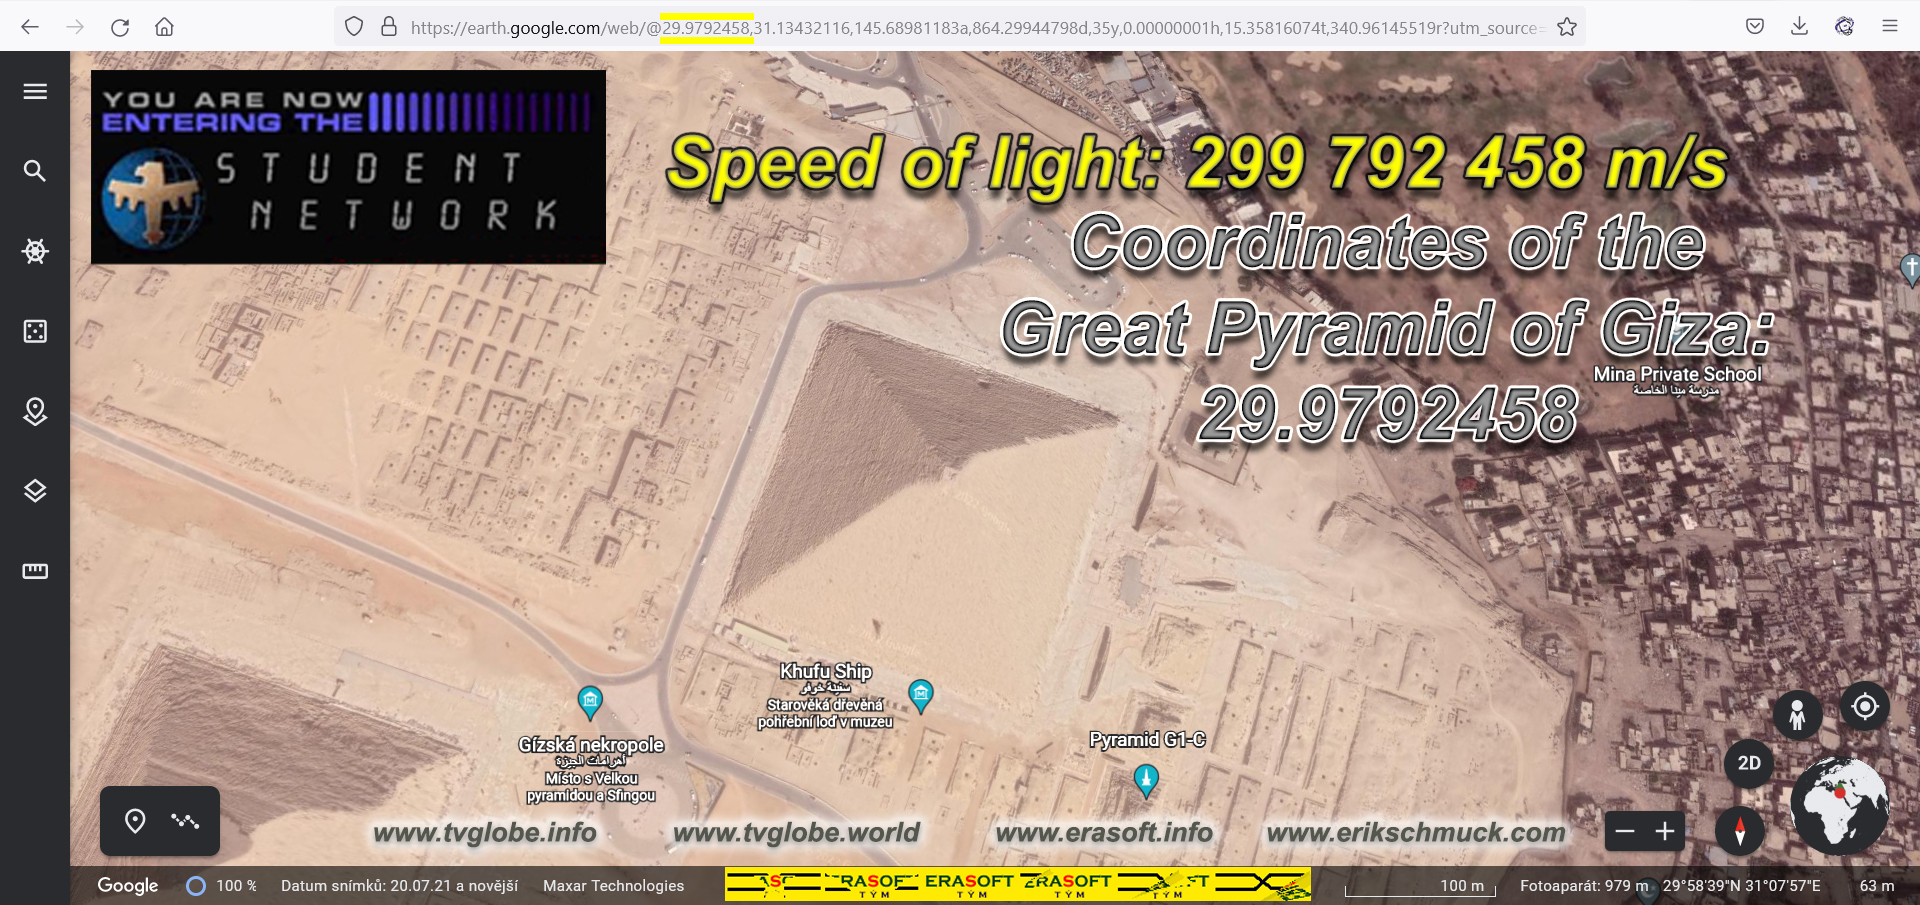 Great Pyramid of Giza - Coordinates vs speed of light - Erik Schmuck DiS.